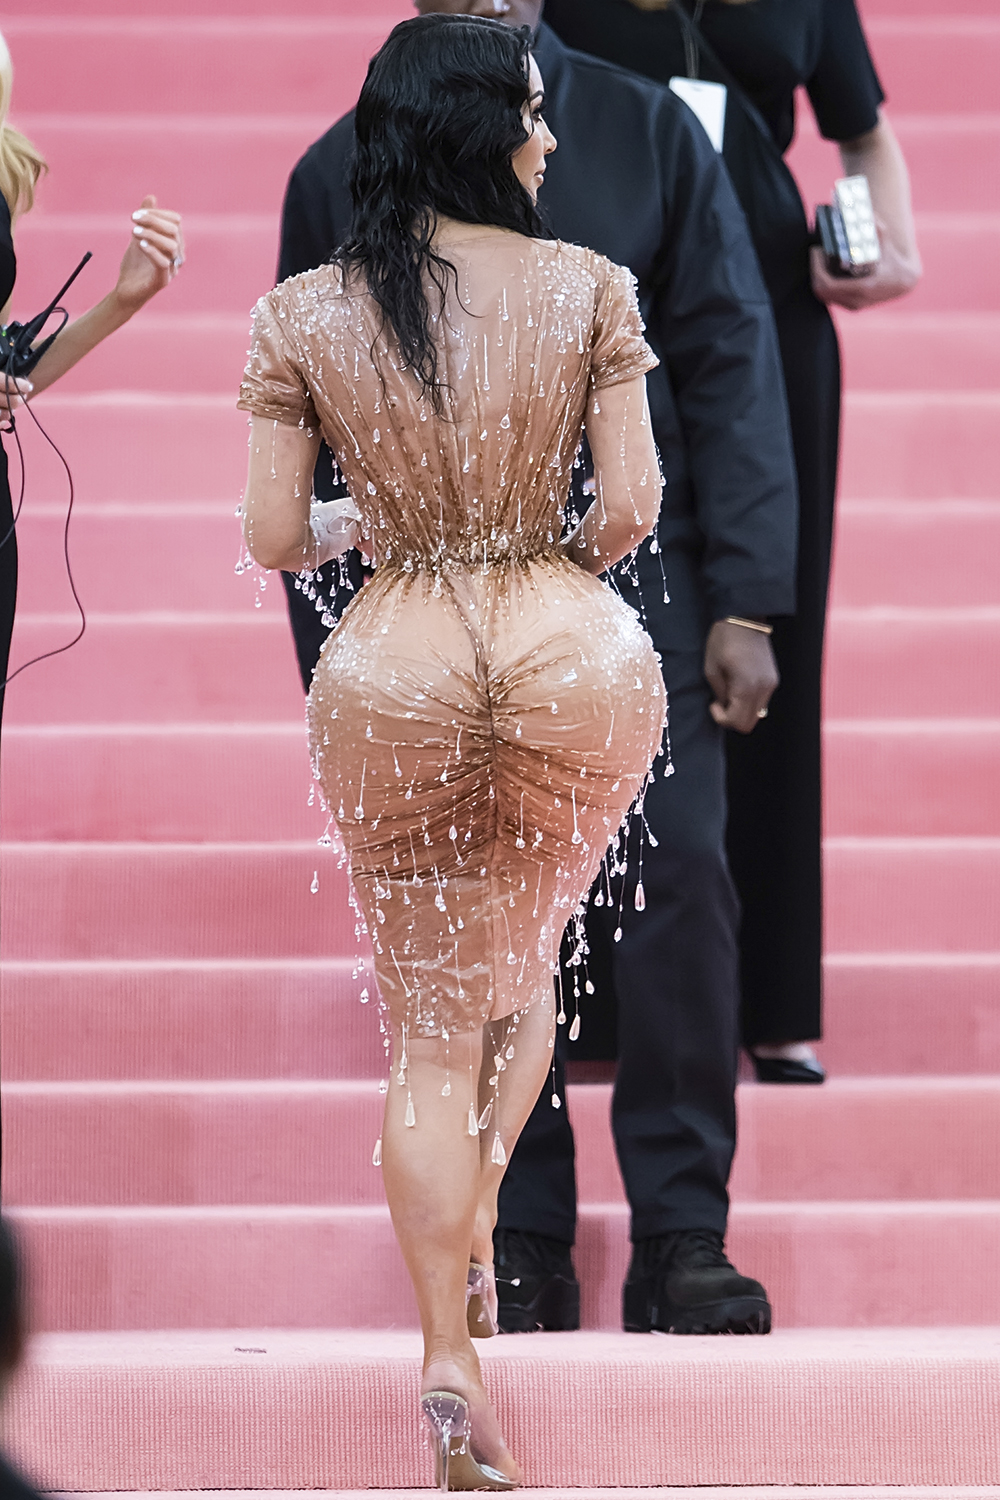 MARKETING - Kim Kardashian: symbol of the “promotional butt”